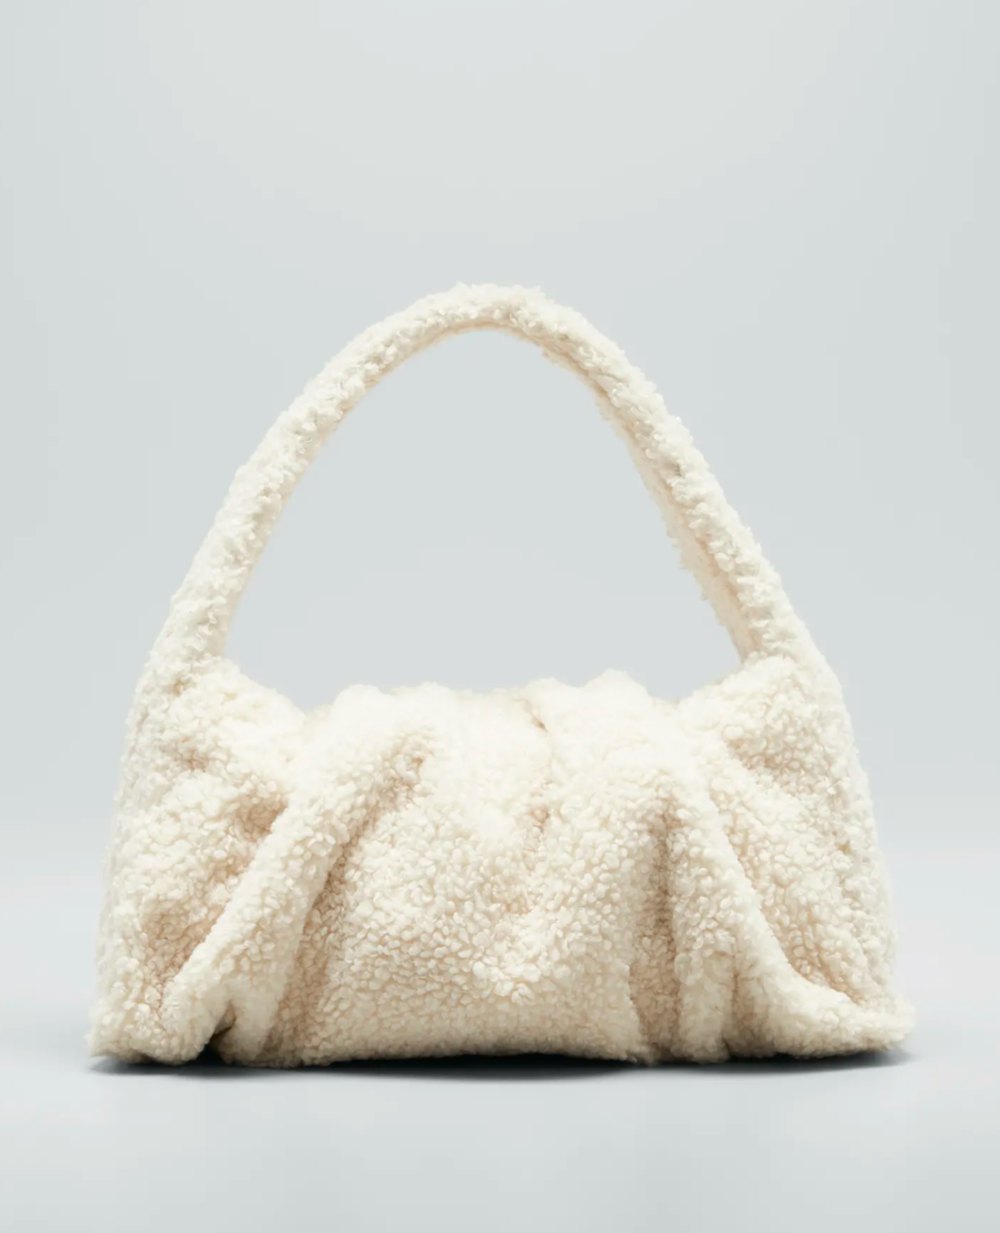 Fluffy, Fuzzy Handbags Are Trending for Winter 2021